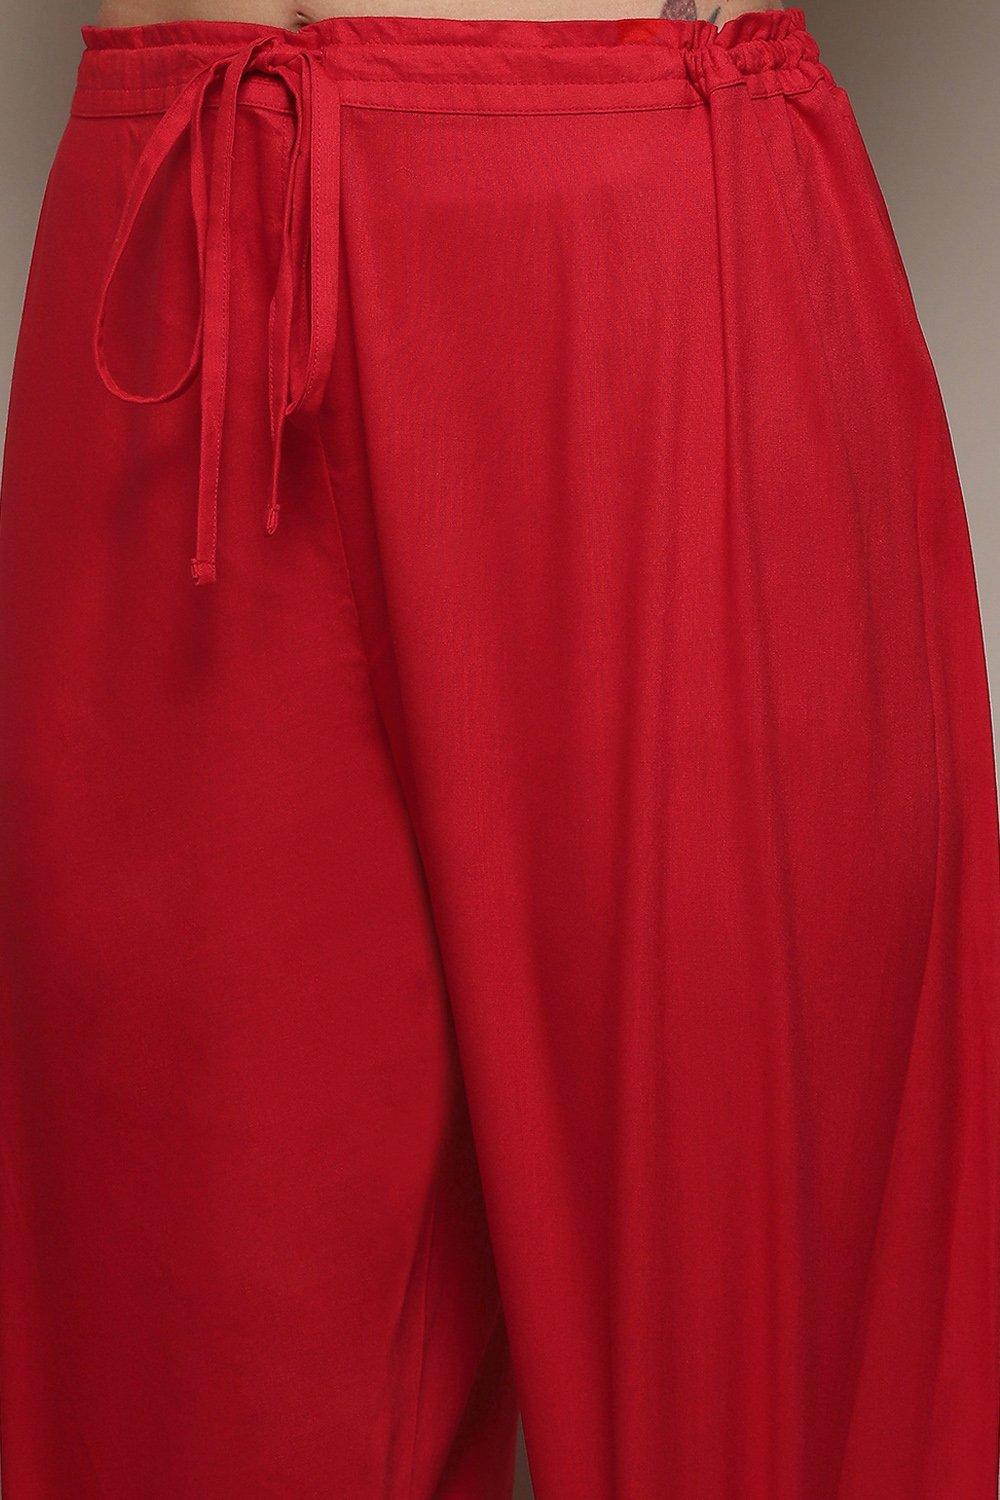 Buy Red Cambric Kalidar Printed Kurta Palazzo Suit Set for INR2399.40 ...